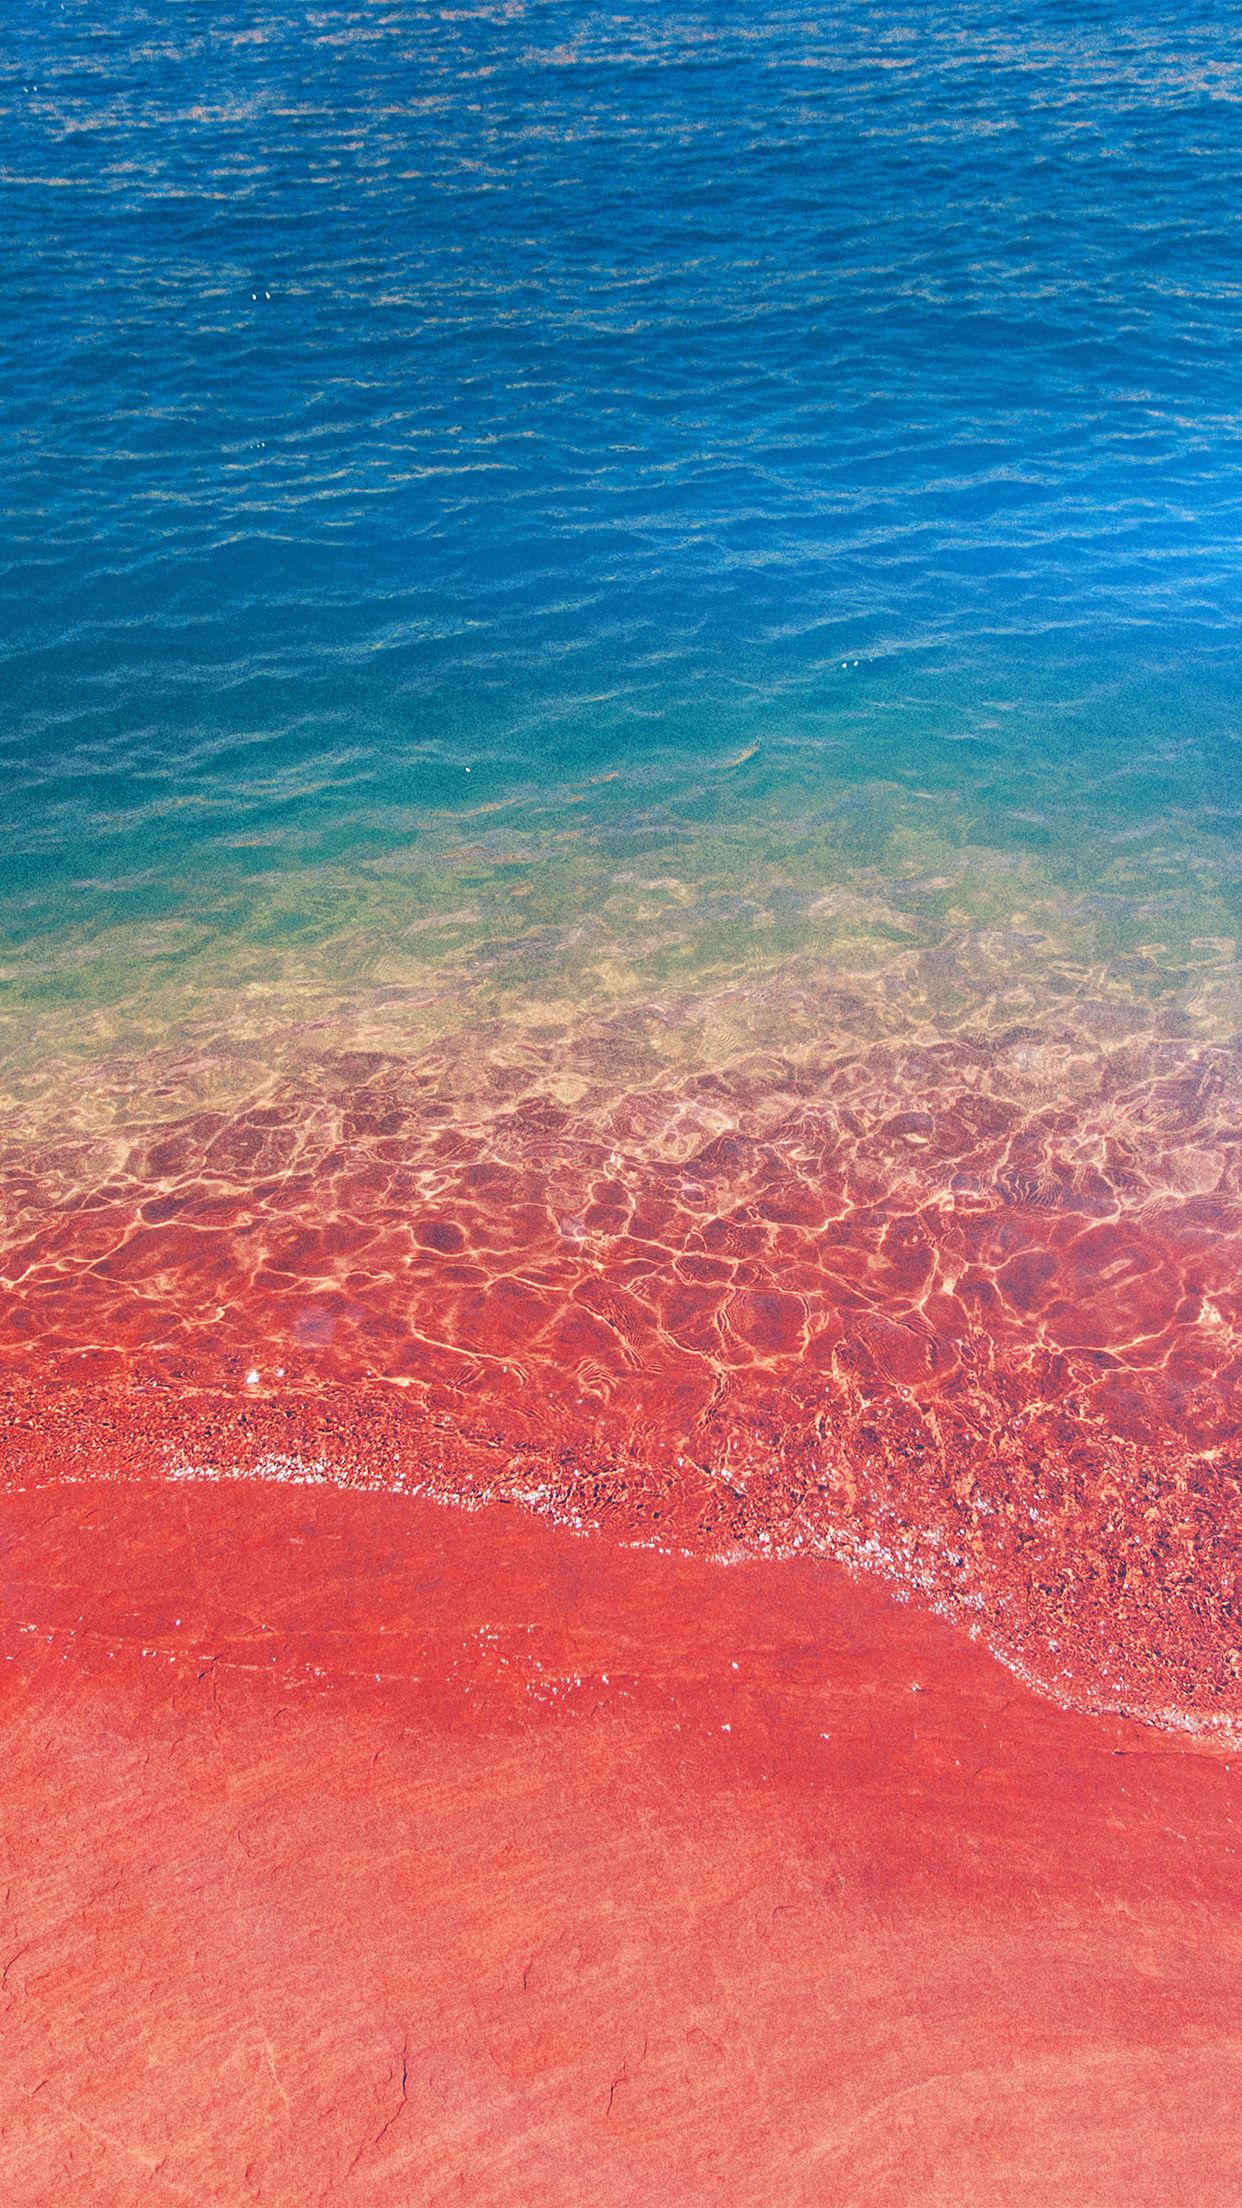 iPhone X wallpaper. sea water beach summer nature pink flare